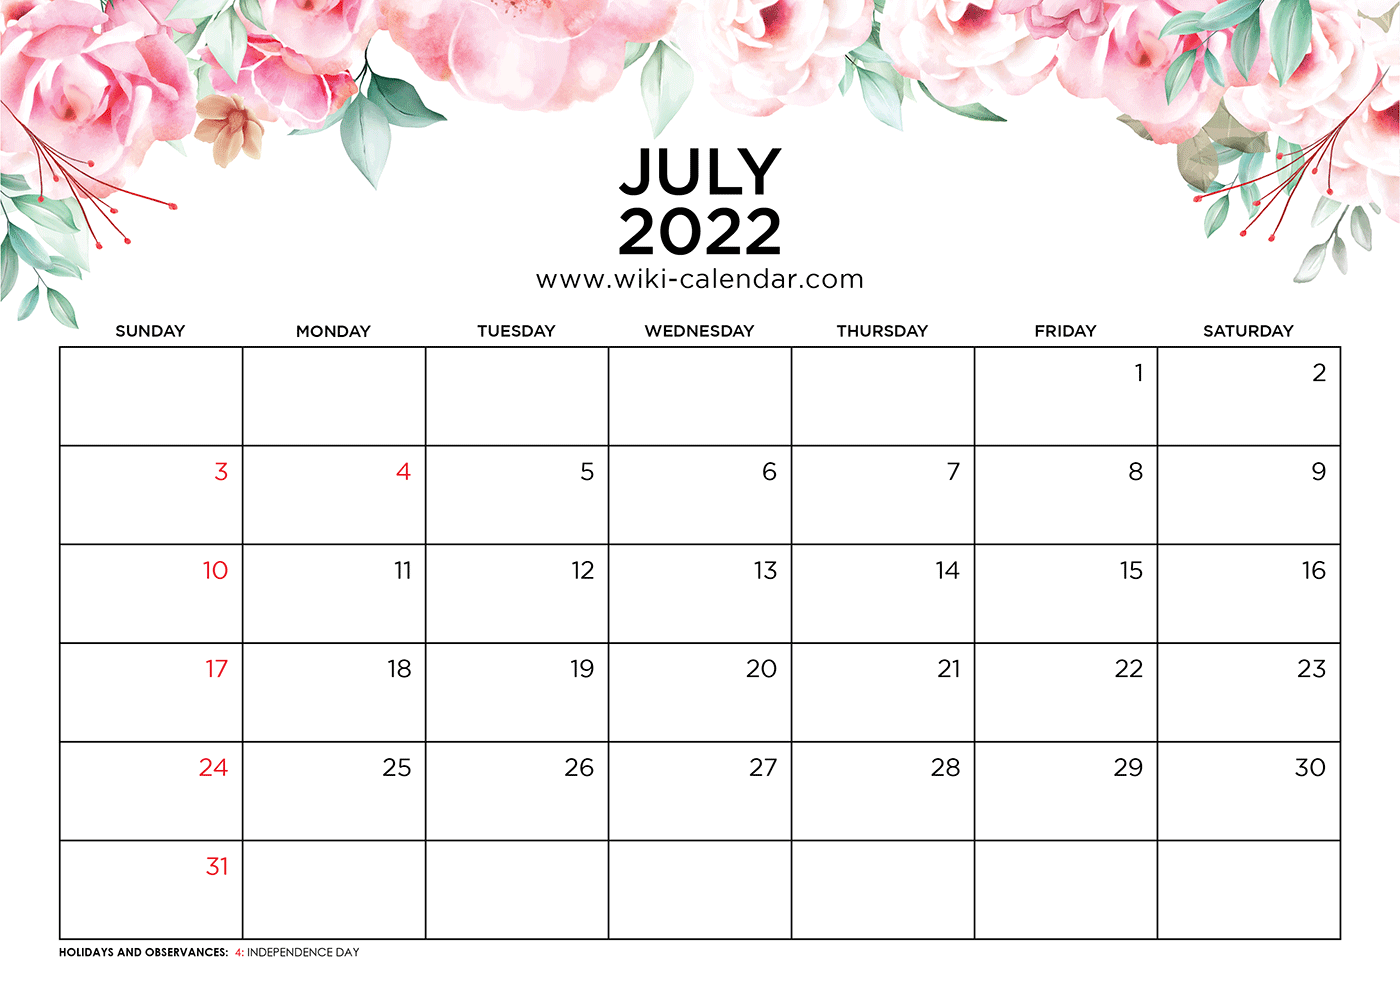 free-printable-july-2022-calendars-wiki-calendar-july-2022-calendars